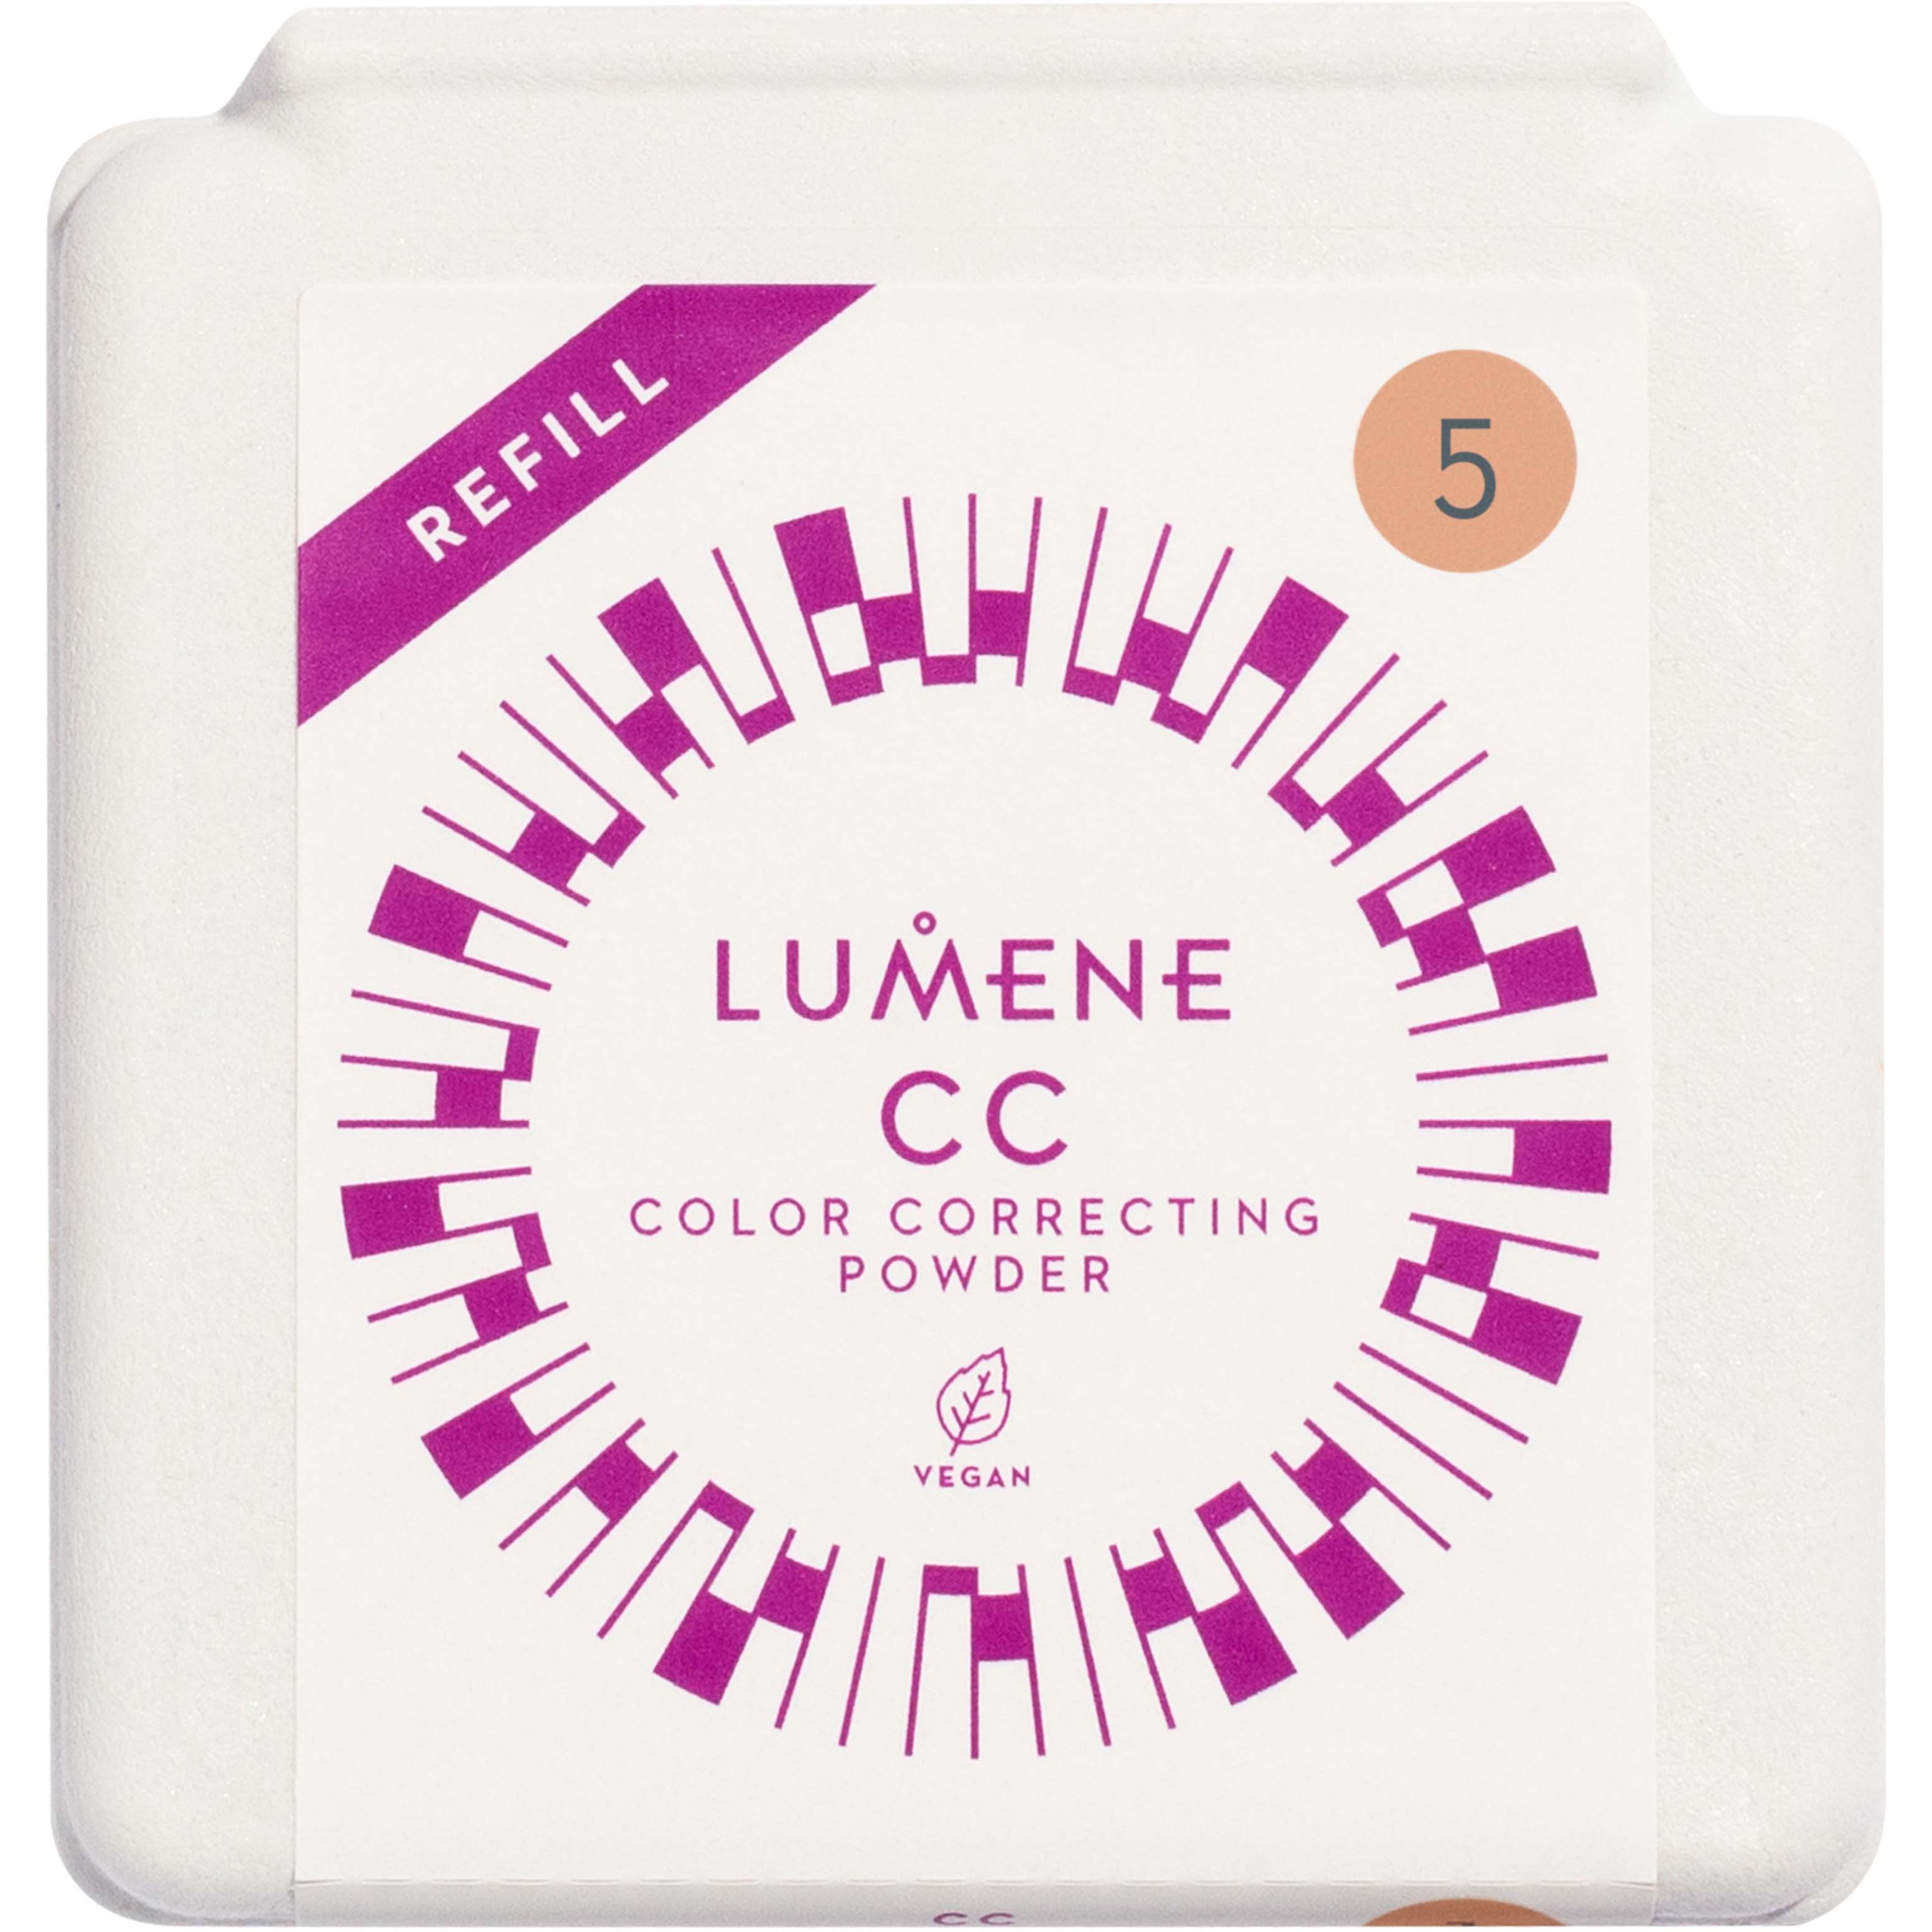 Lumene CC Color Correcting Powder Refill 5